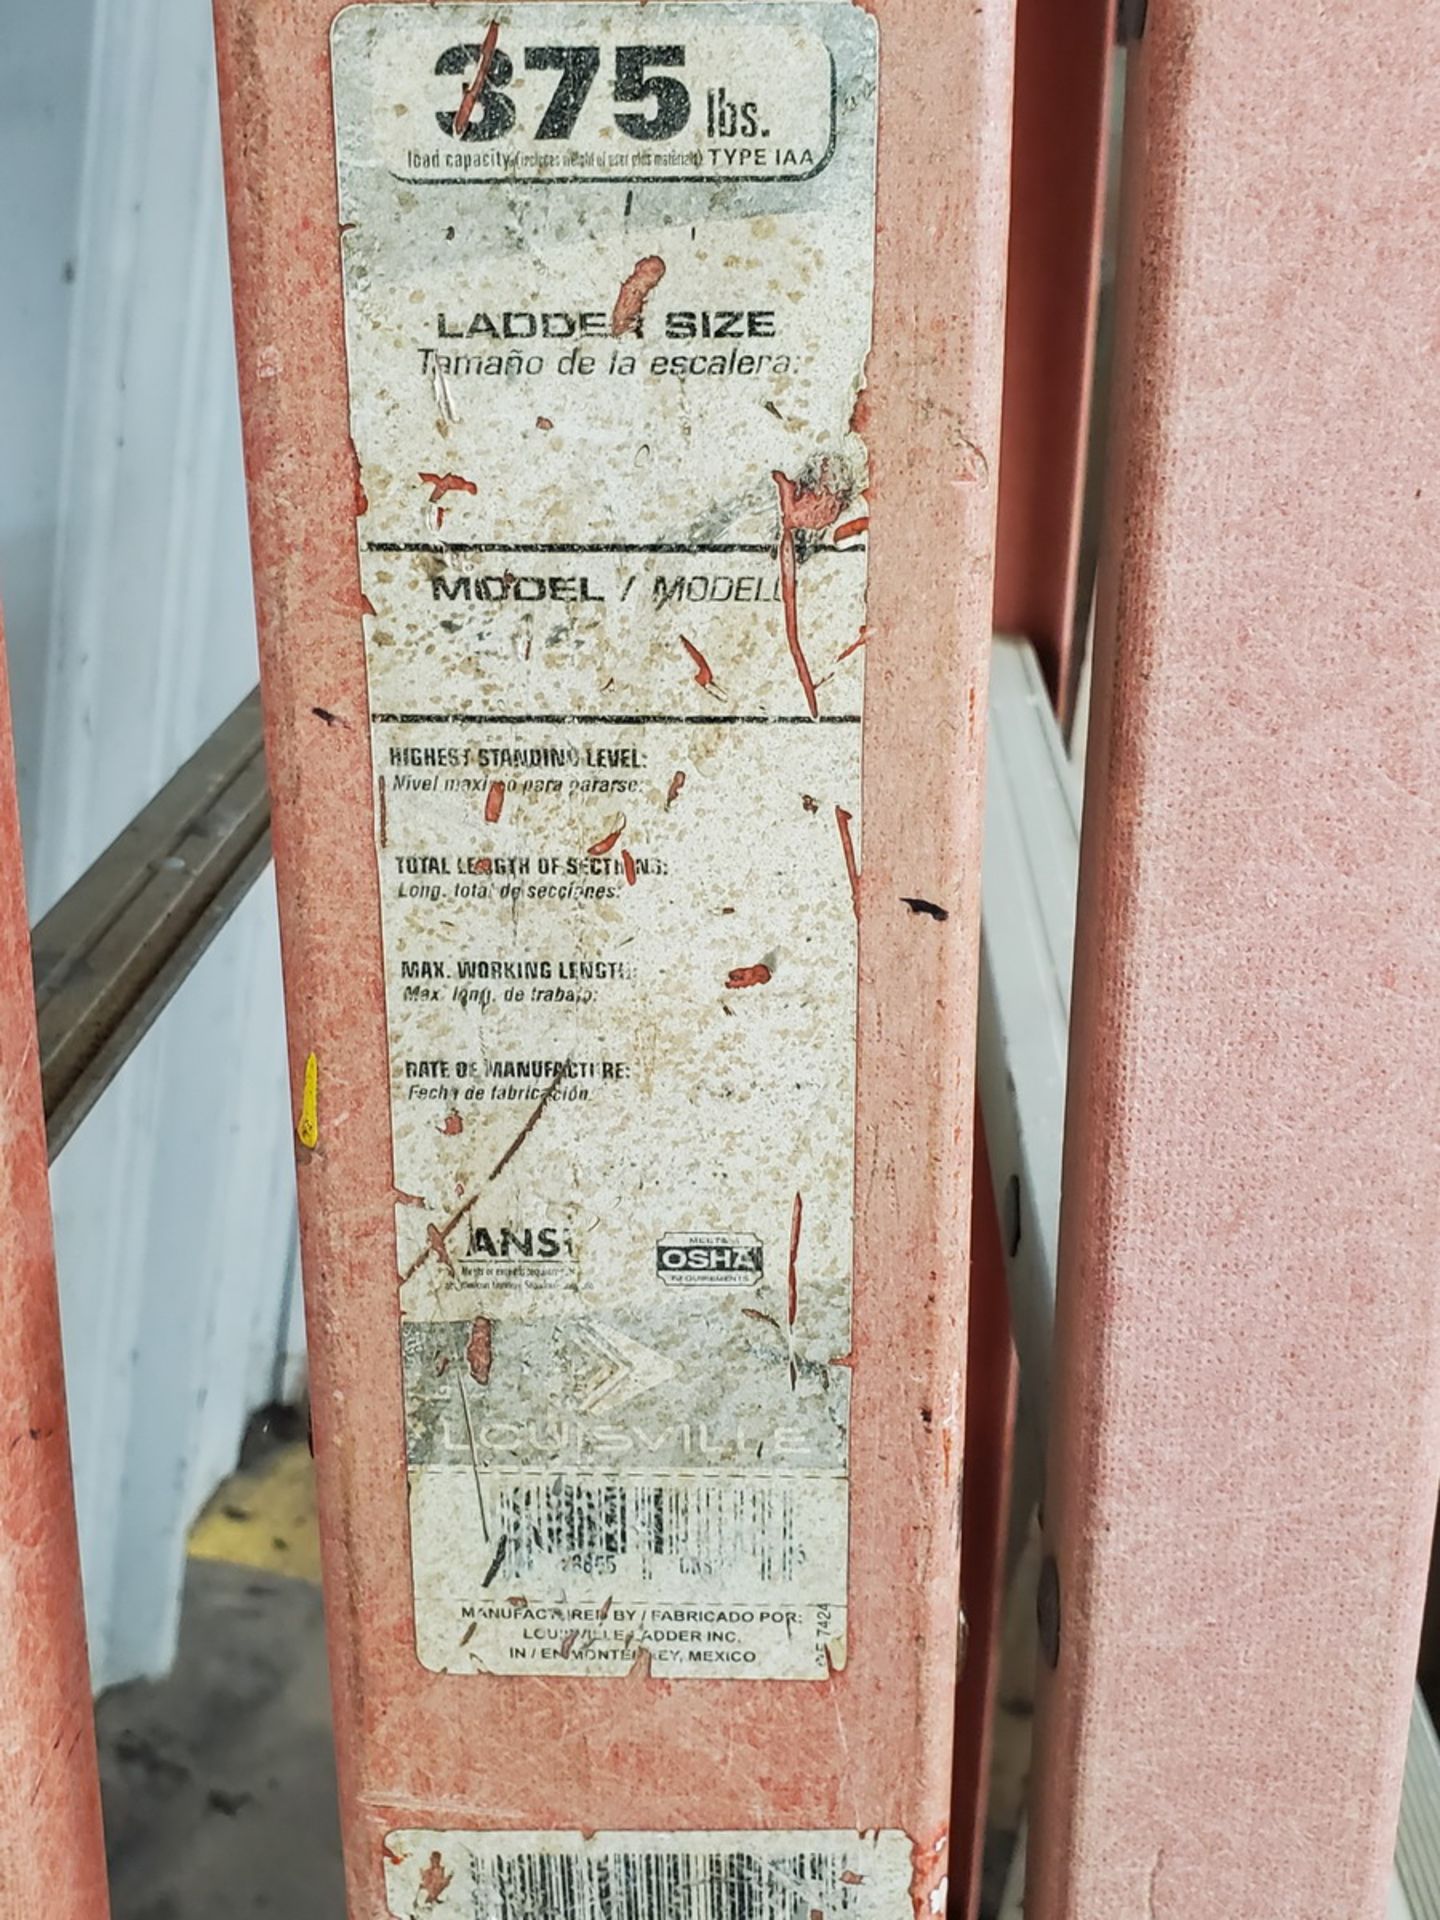 Louisville (2) 4' Fiberglass Platform Ladders 375lbs Cap. - Image 3 of 3